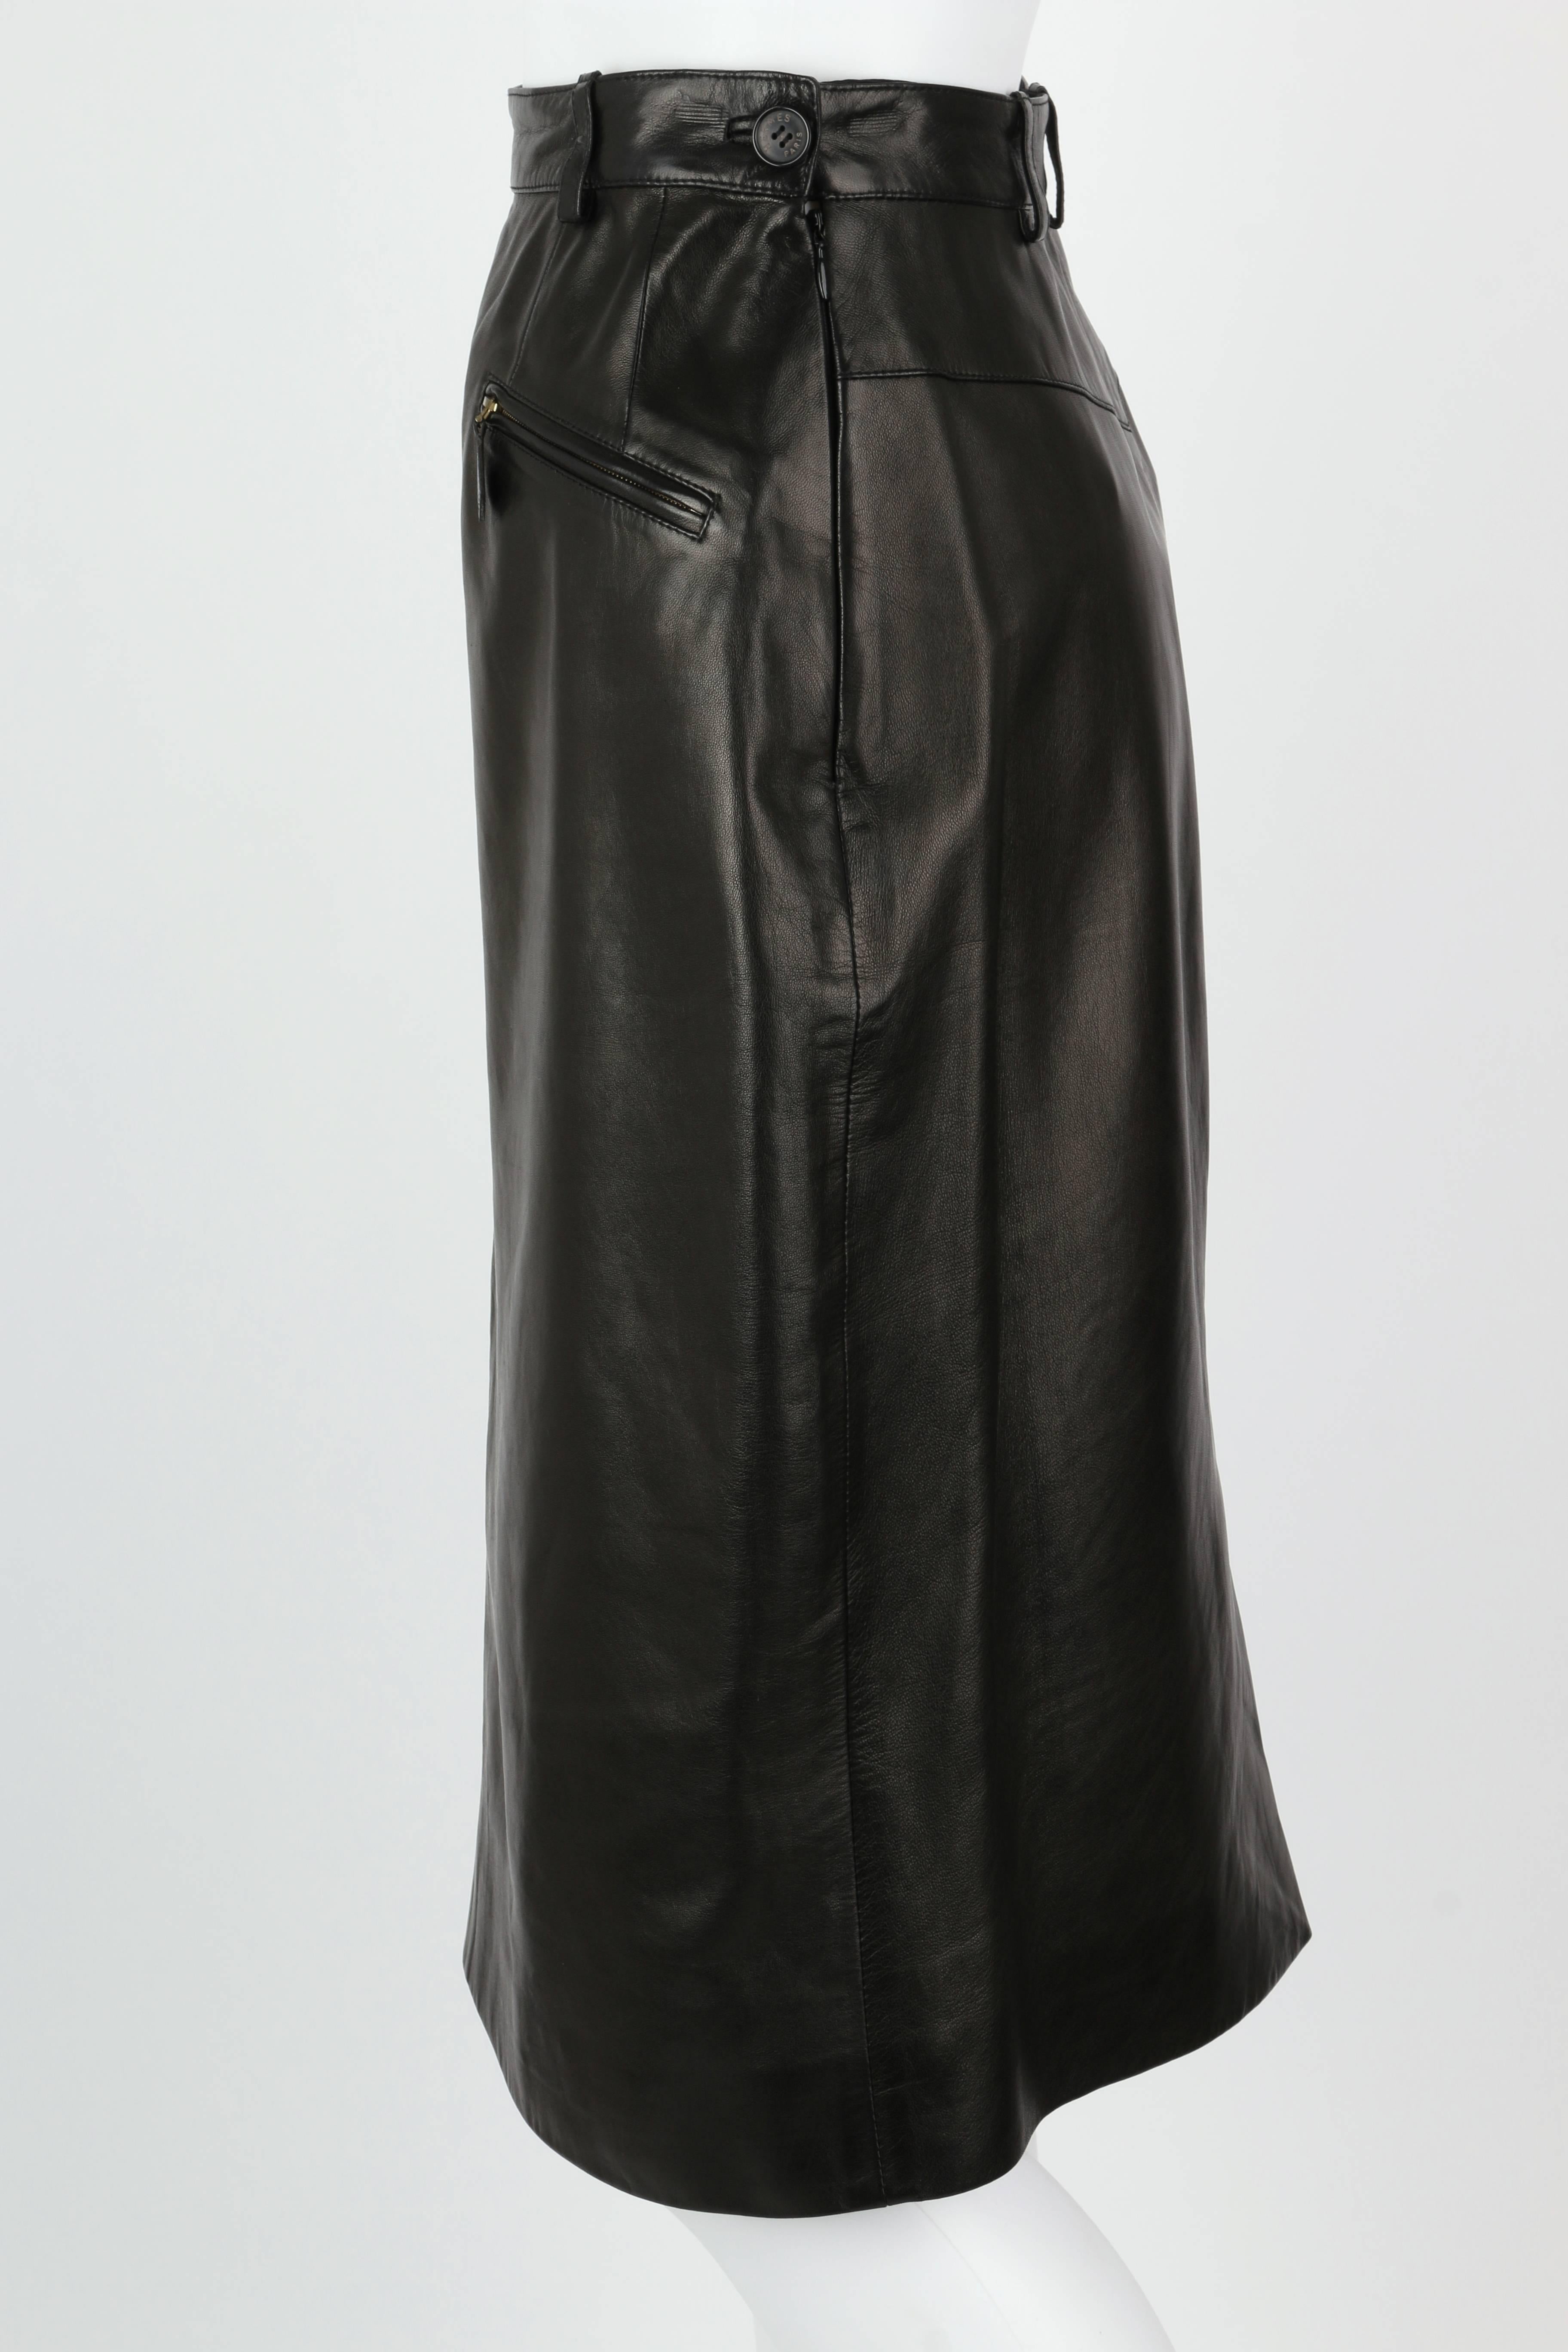 HERMES c.1990's Black Genuine Lambskin Leather Zipper Pencil Skirt Size 40 1